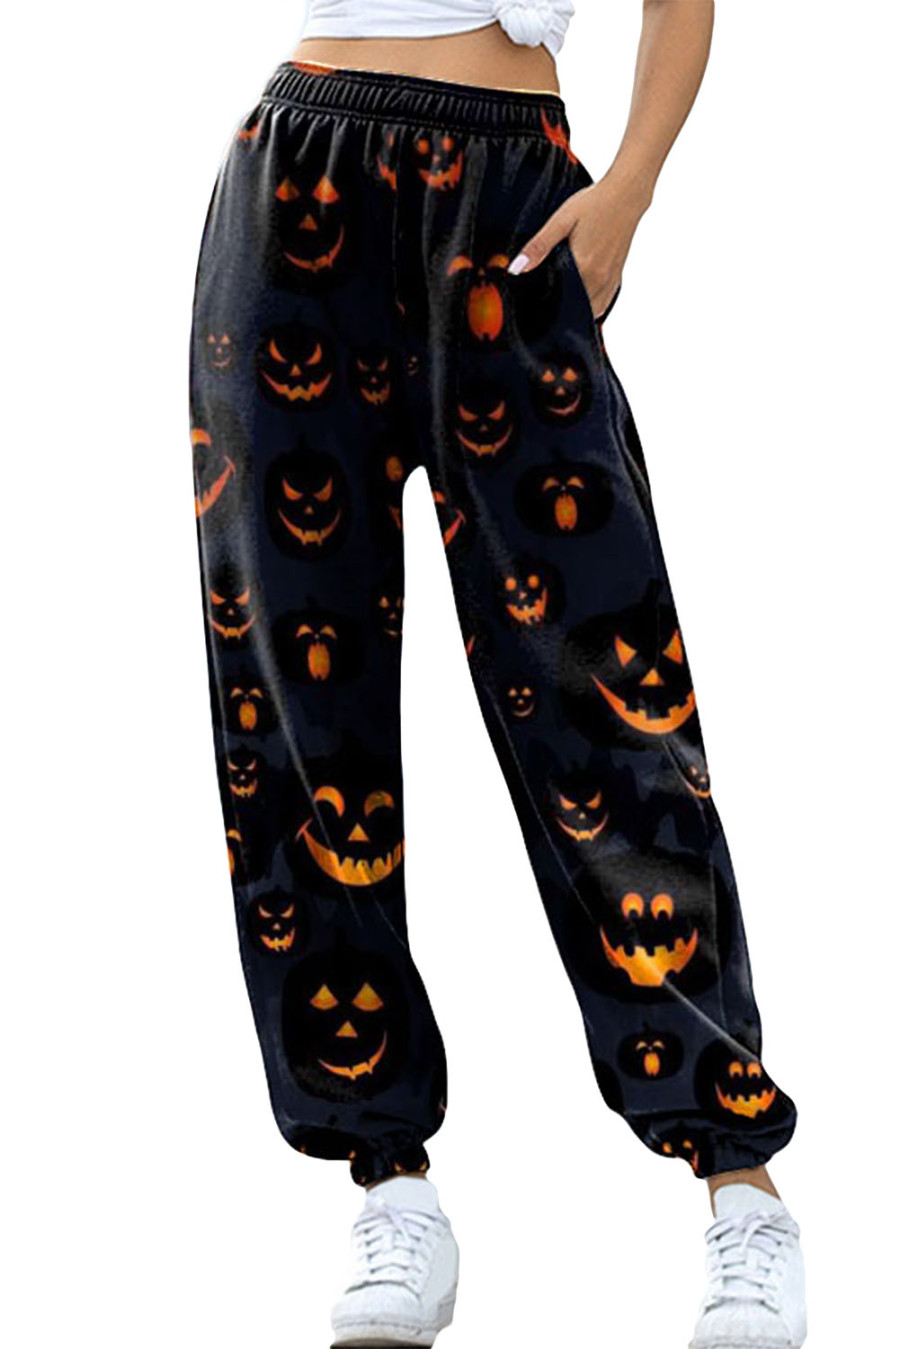 US$ 9.9 Black Halloween Jack-O-lantern Print Sweatpants Wholesale